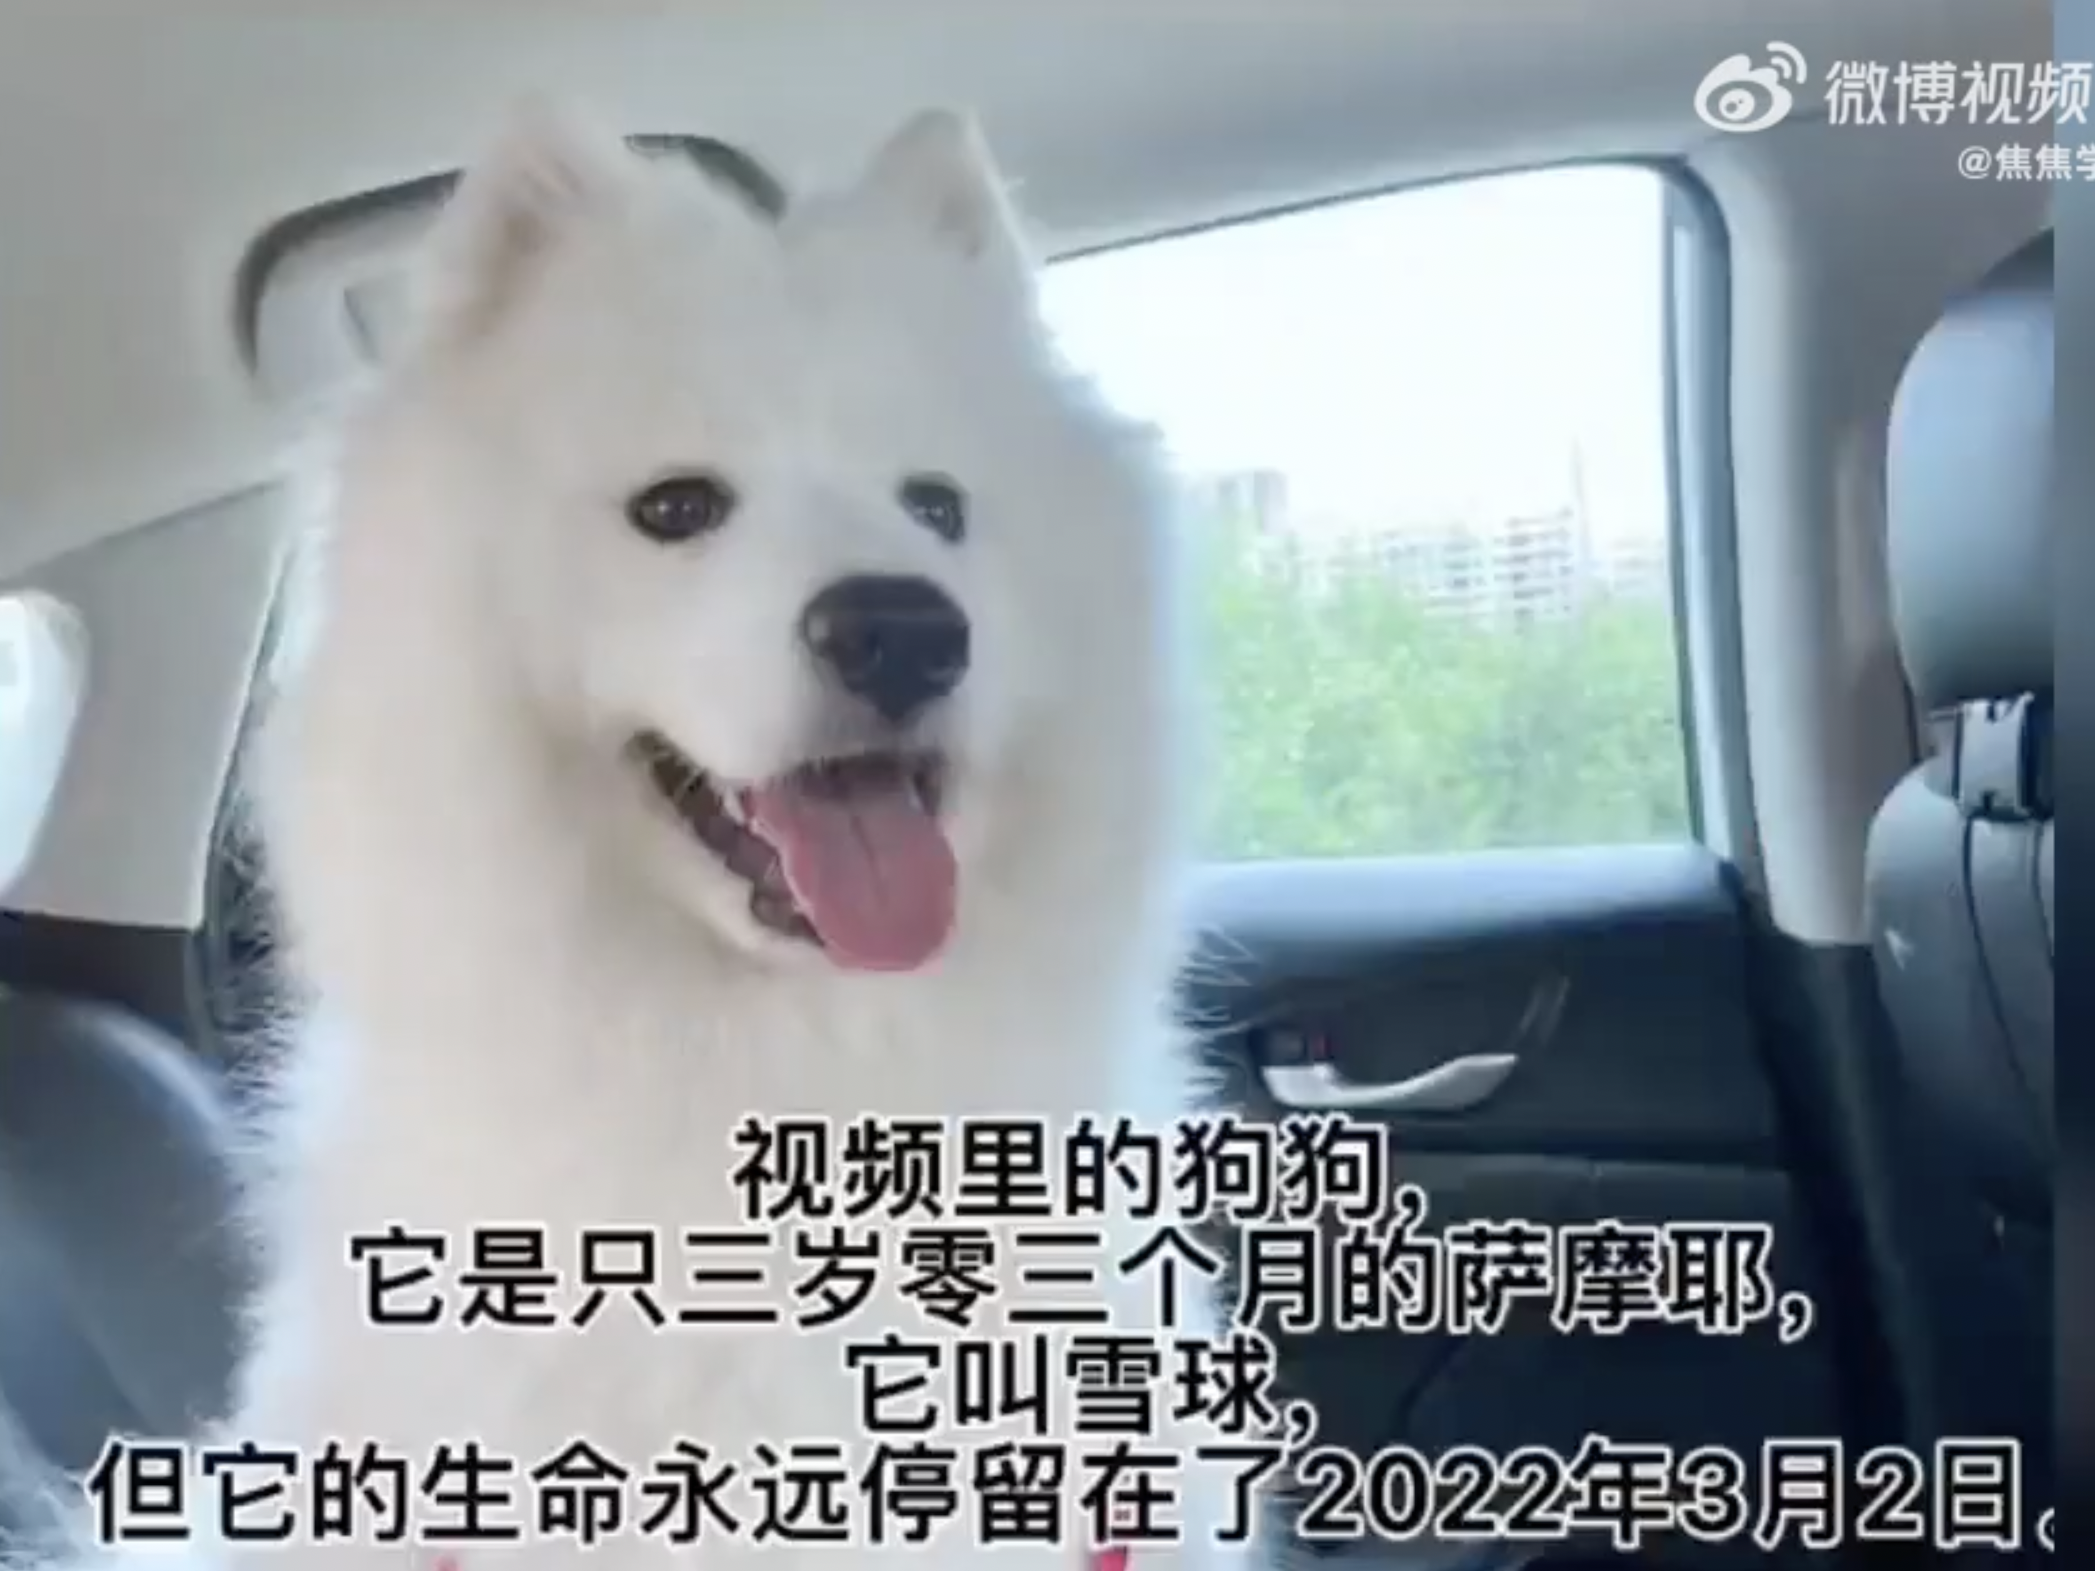 screenshot of weibo post featuring samoyed dog Snowball